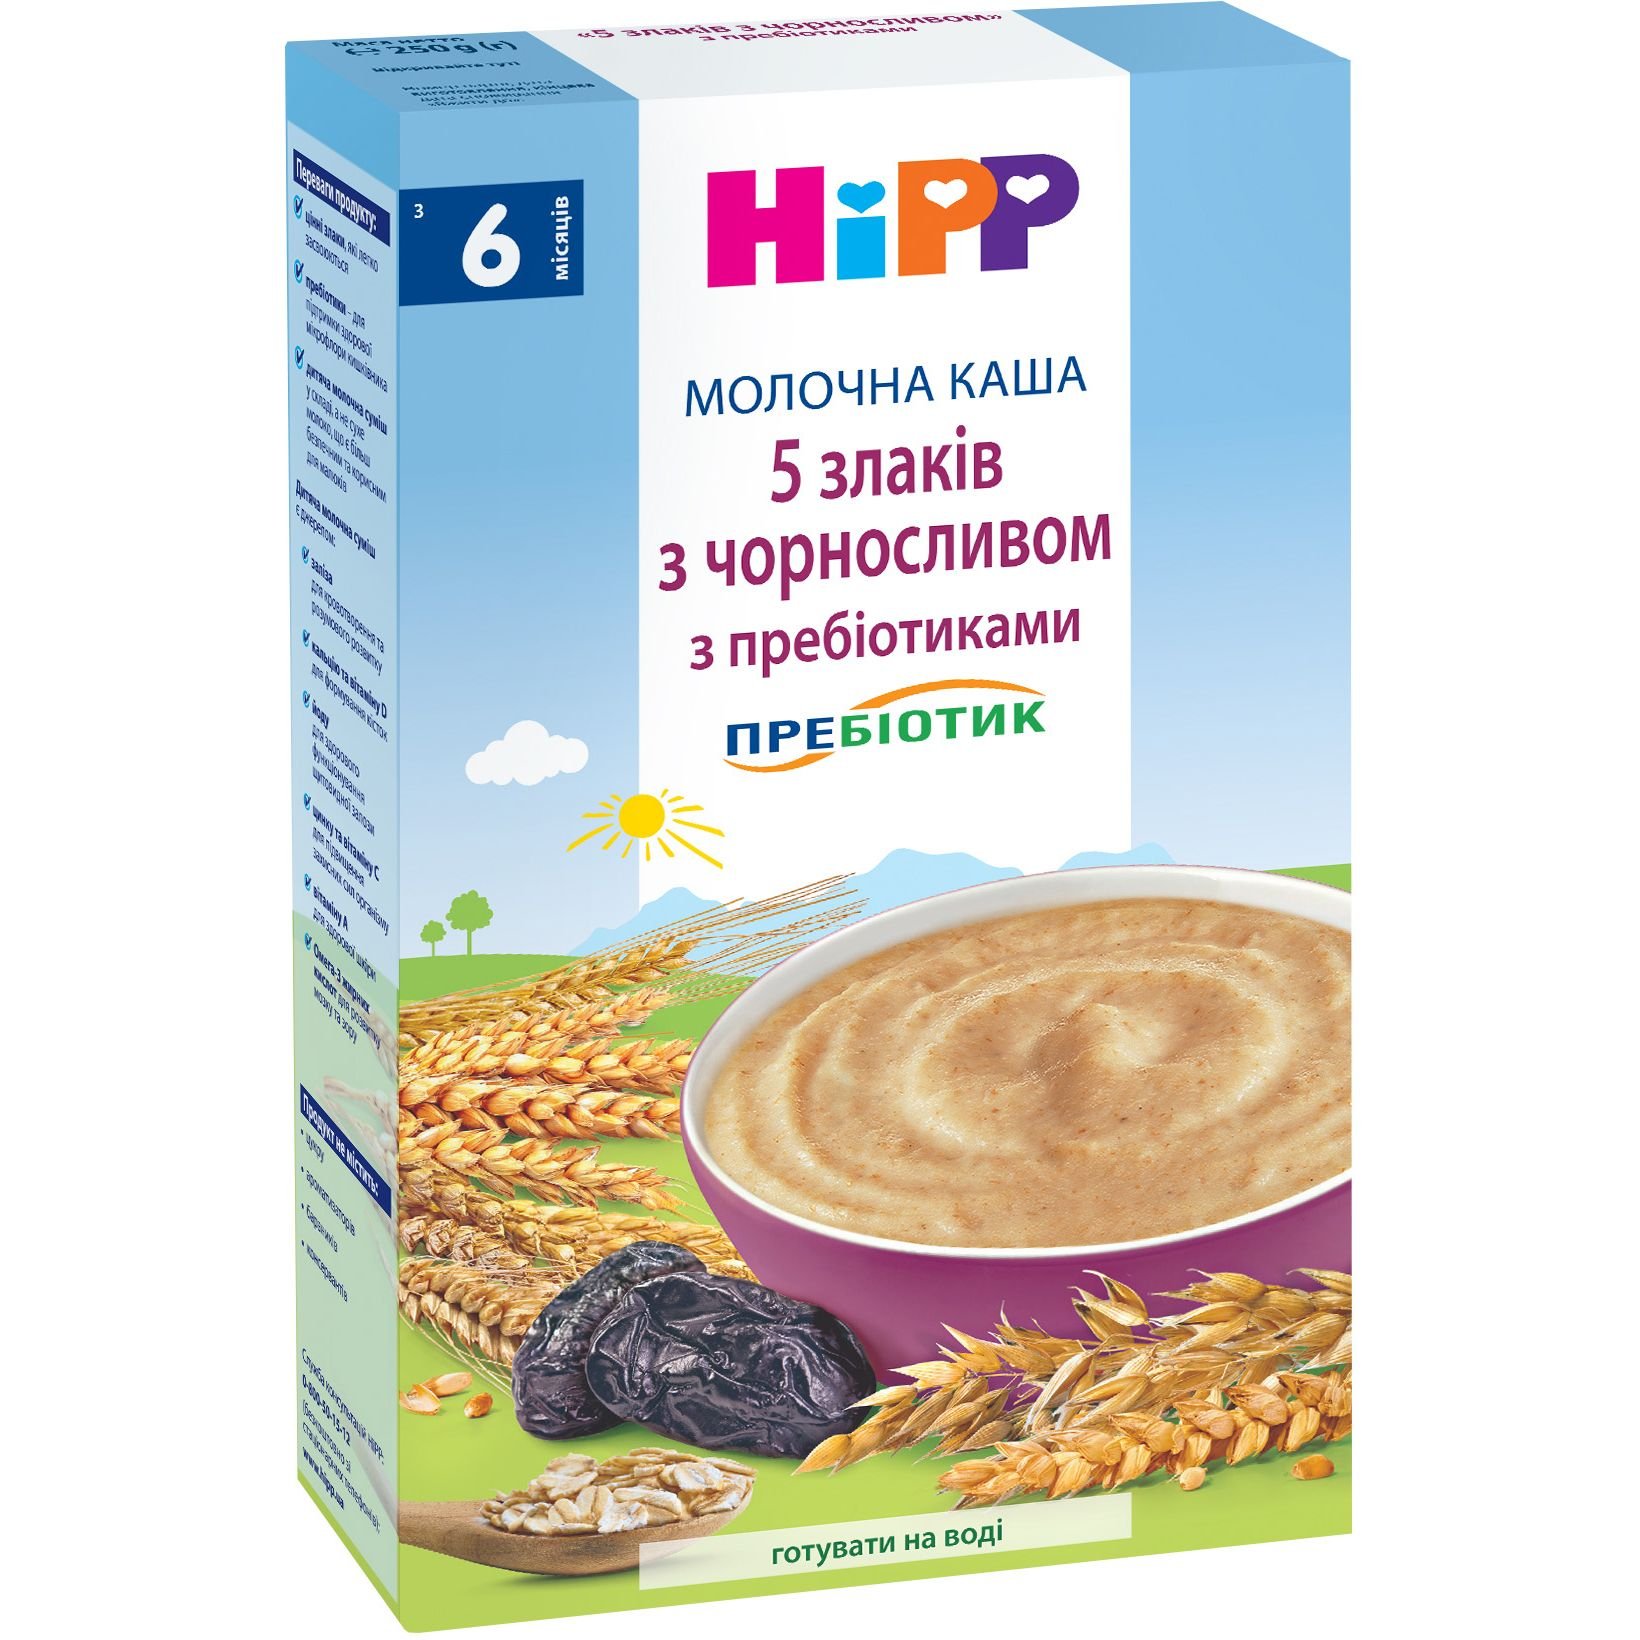 Молочная каша HiPP 5 злаков с черносливом с пребиотиками 250 г - фото 1